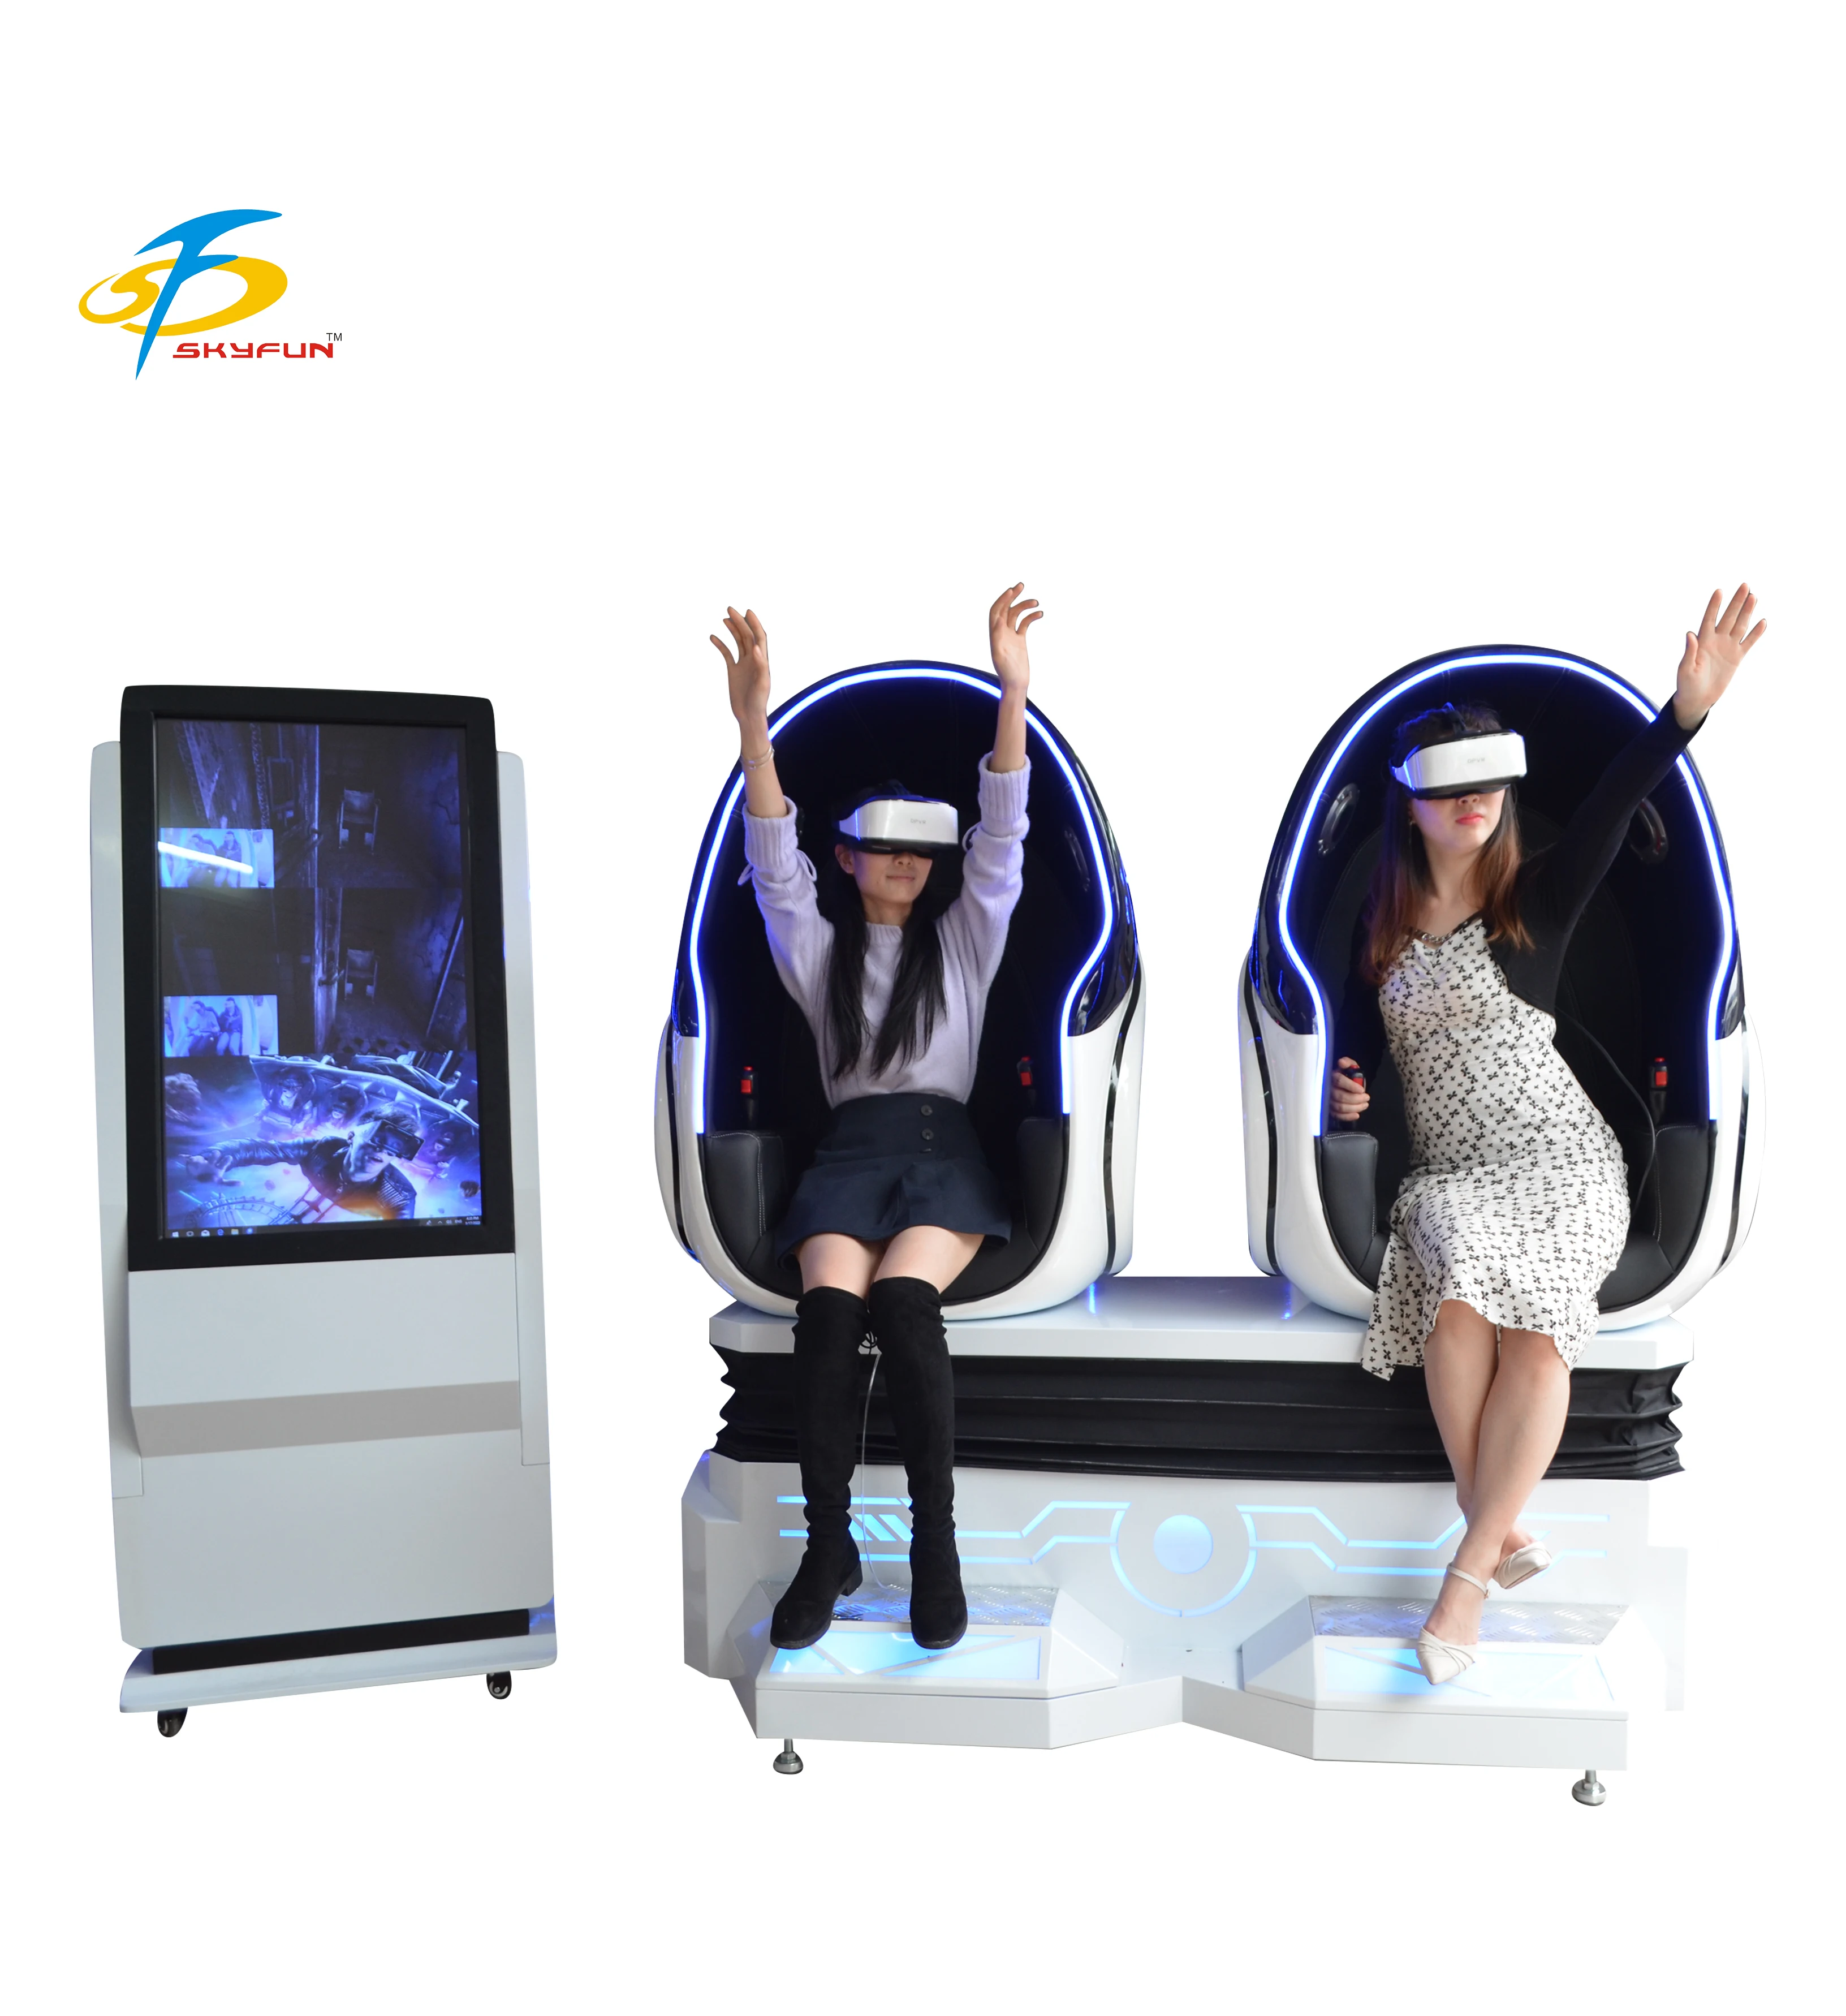 

Super Hot skyfun 2 / 3 / 4 seat multiplayer vr egg chair 9D vr All In One vr roller coaster game simulator vr simultor machine